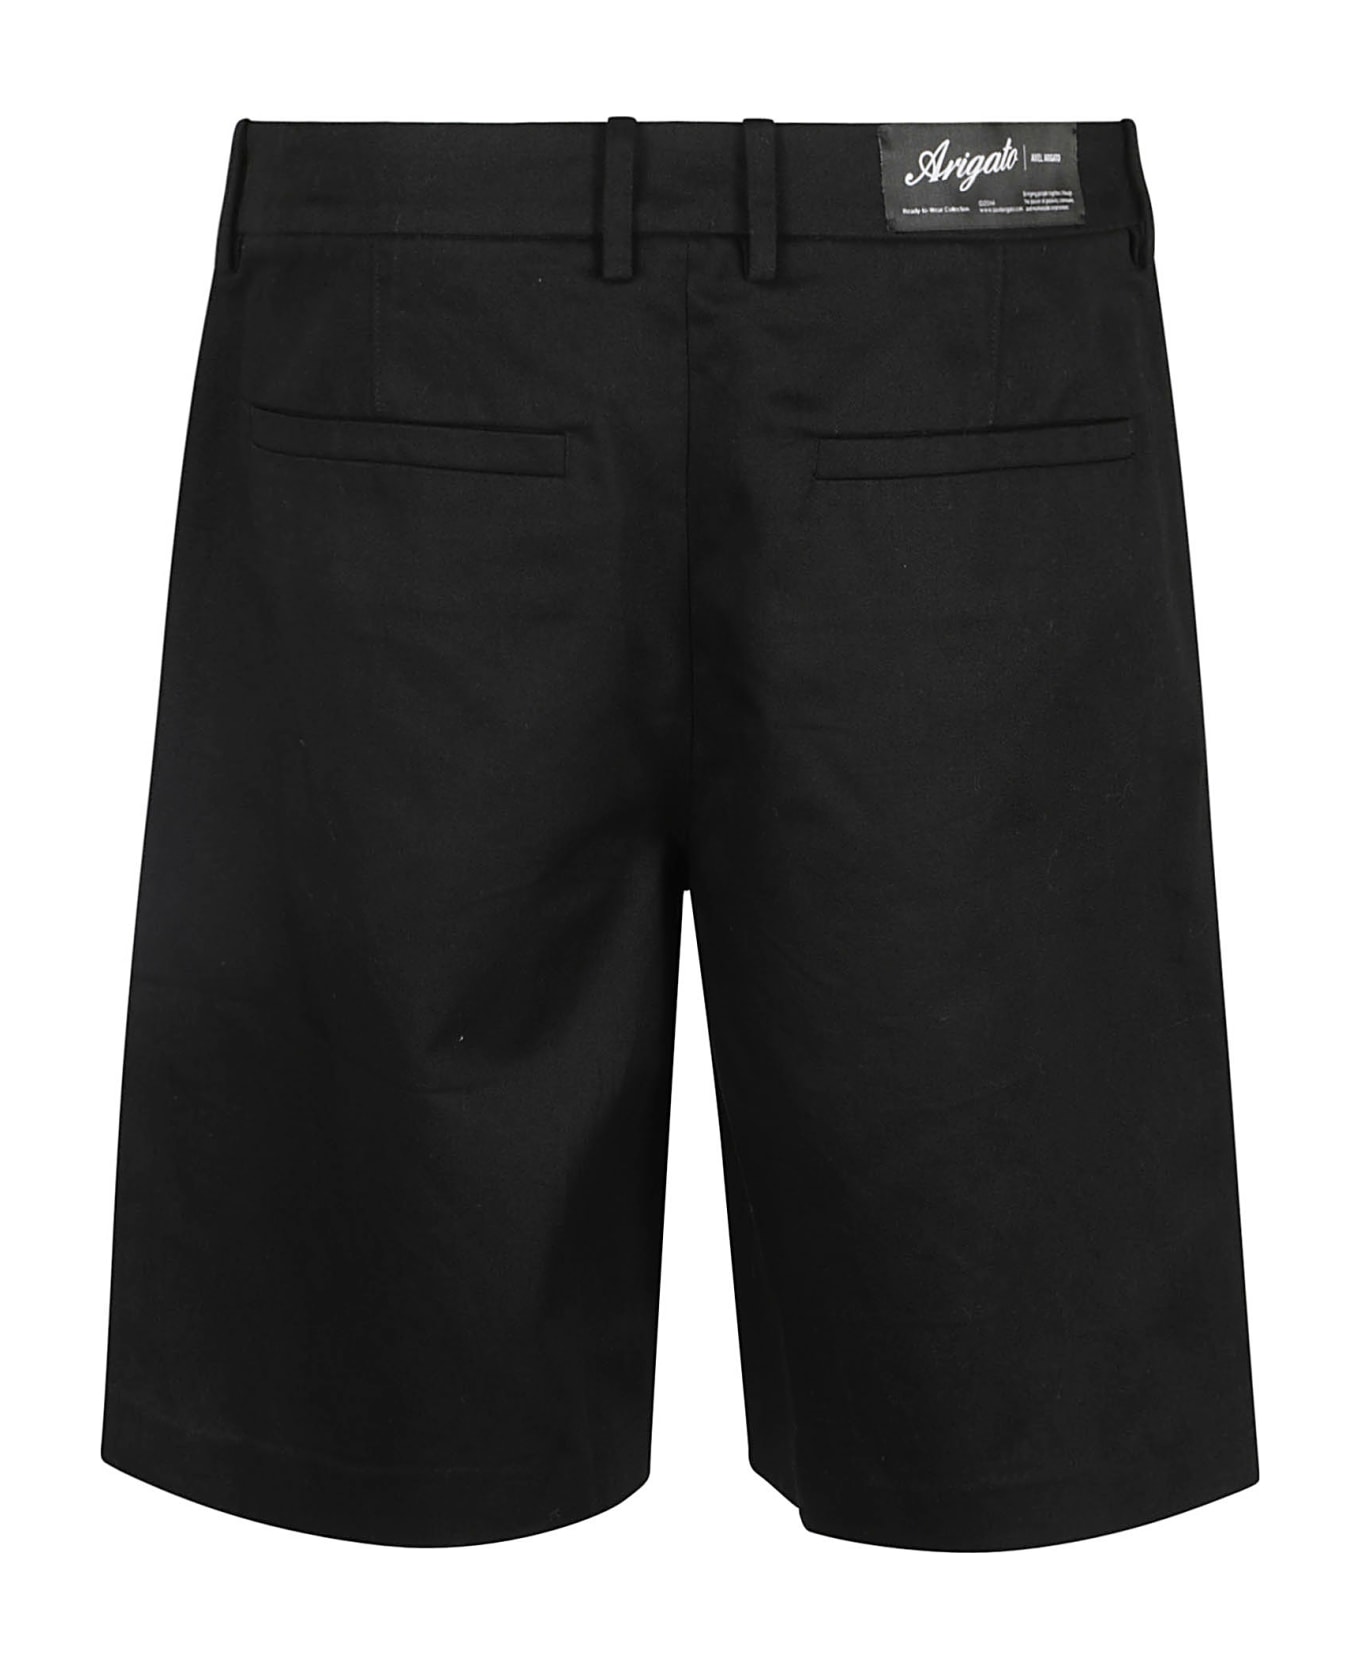 Axel Arigato Buttoned Shorts - Black